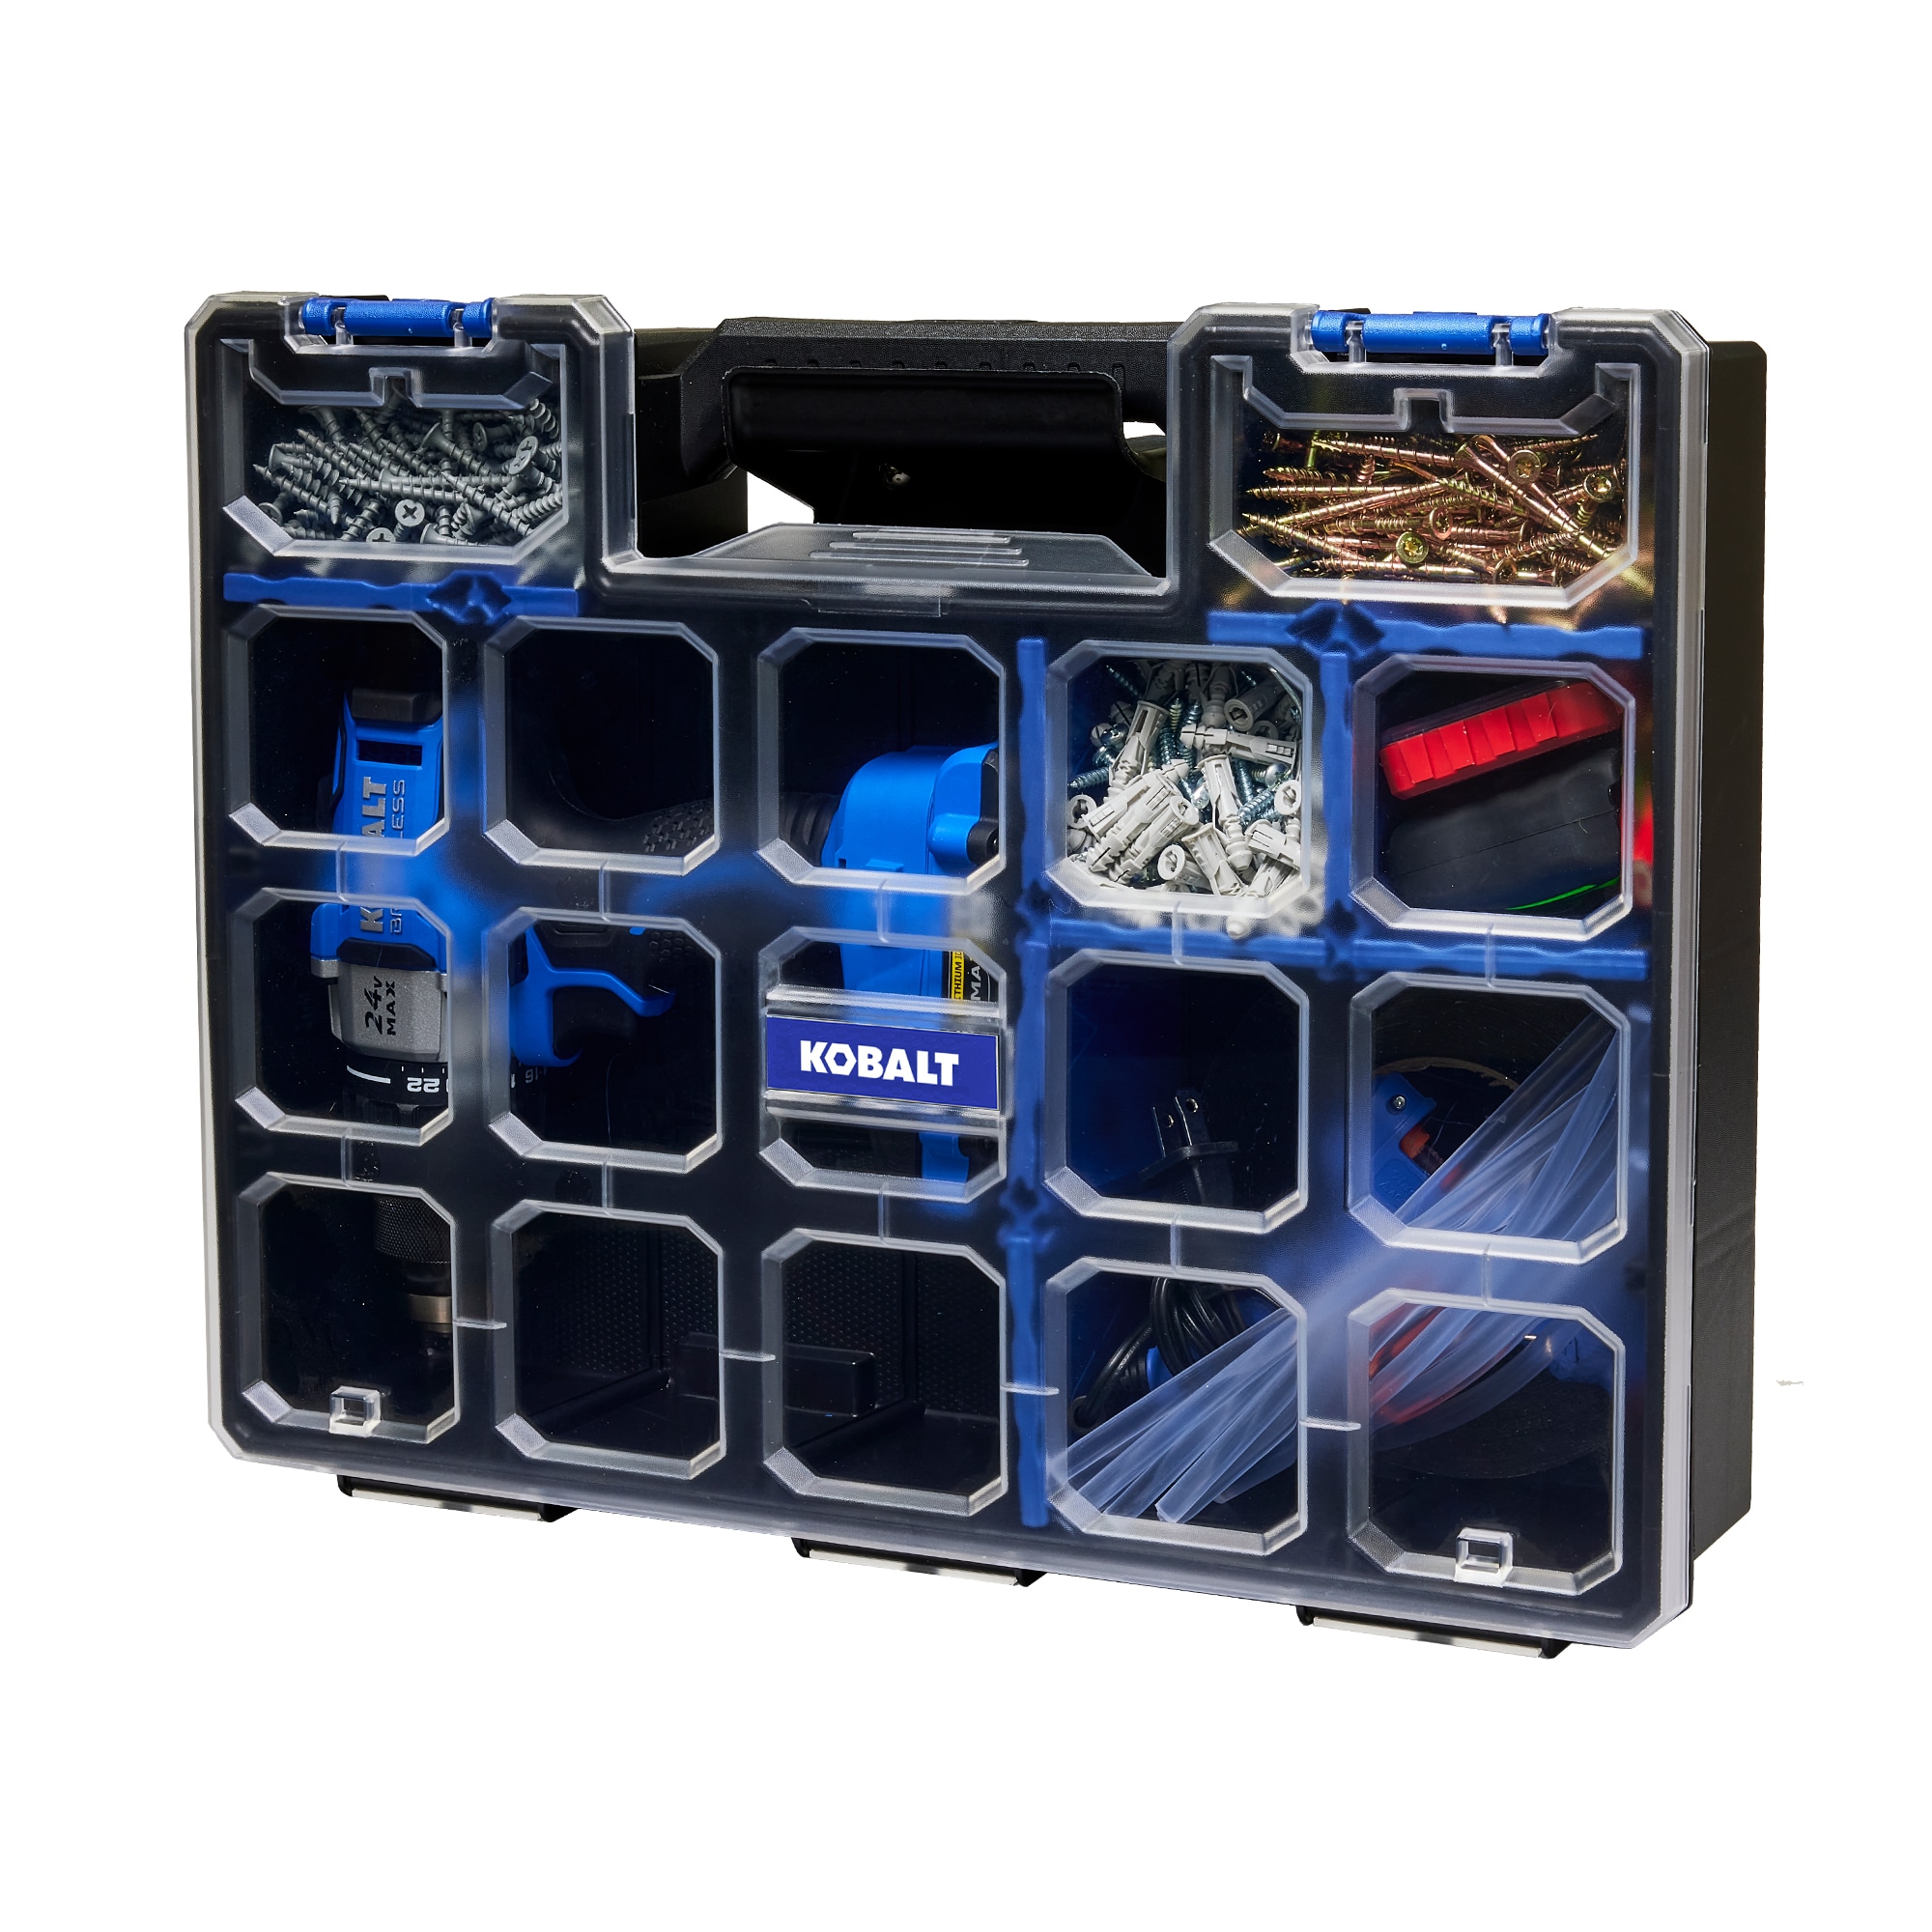 Husky 12 inch 9-Compartment Waterproof Storage Bin Small Parts